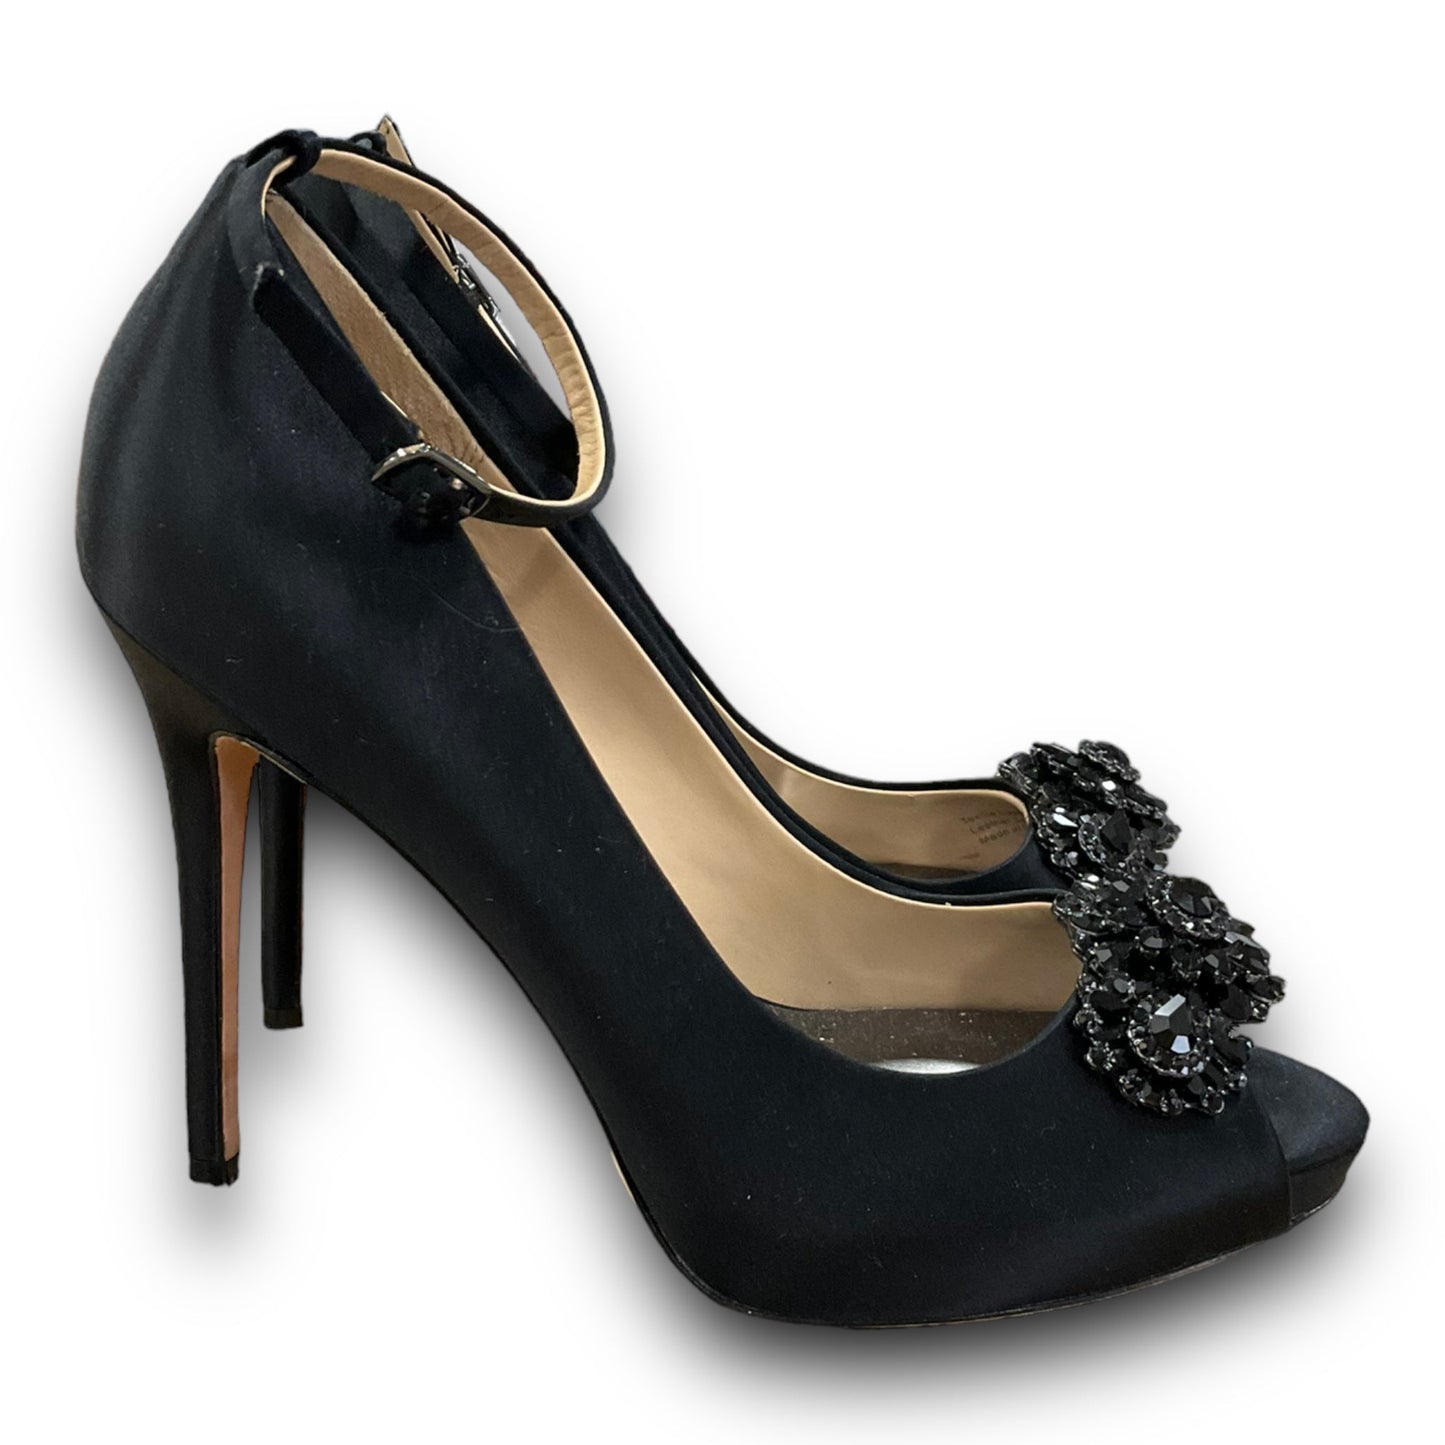 Shoes Heels Stiletto By Badgley Mischka  Size: 8